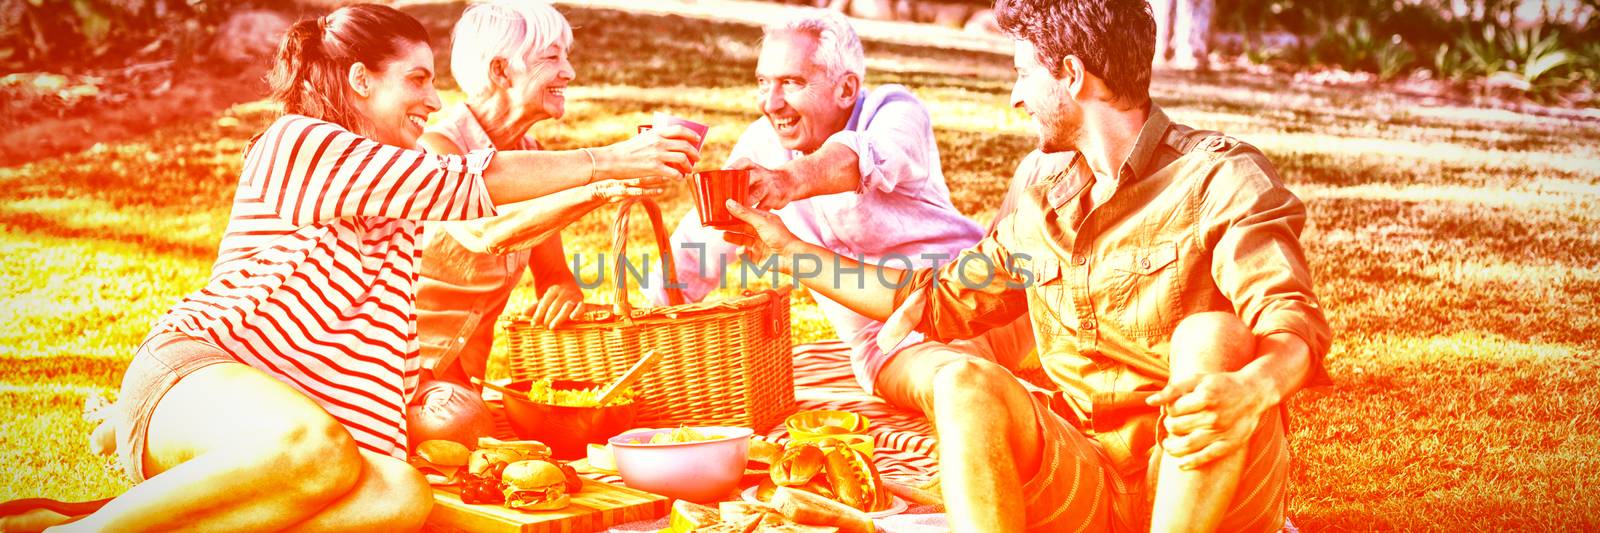 Happy family toasting glasses at picnic in park by Wavebreakmedia